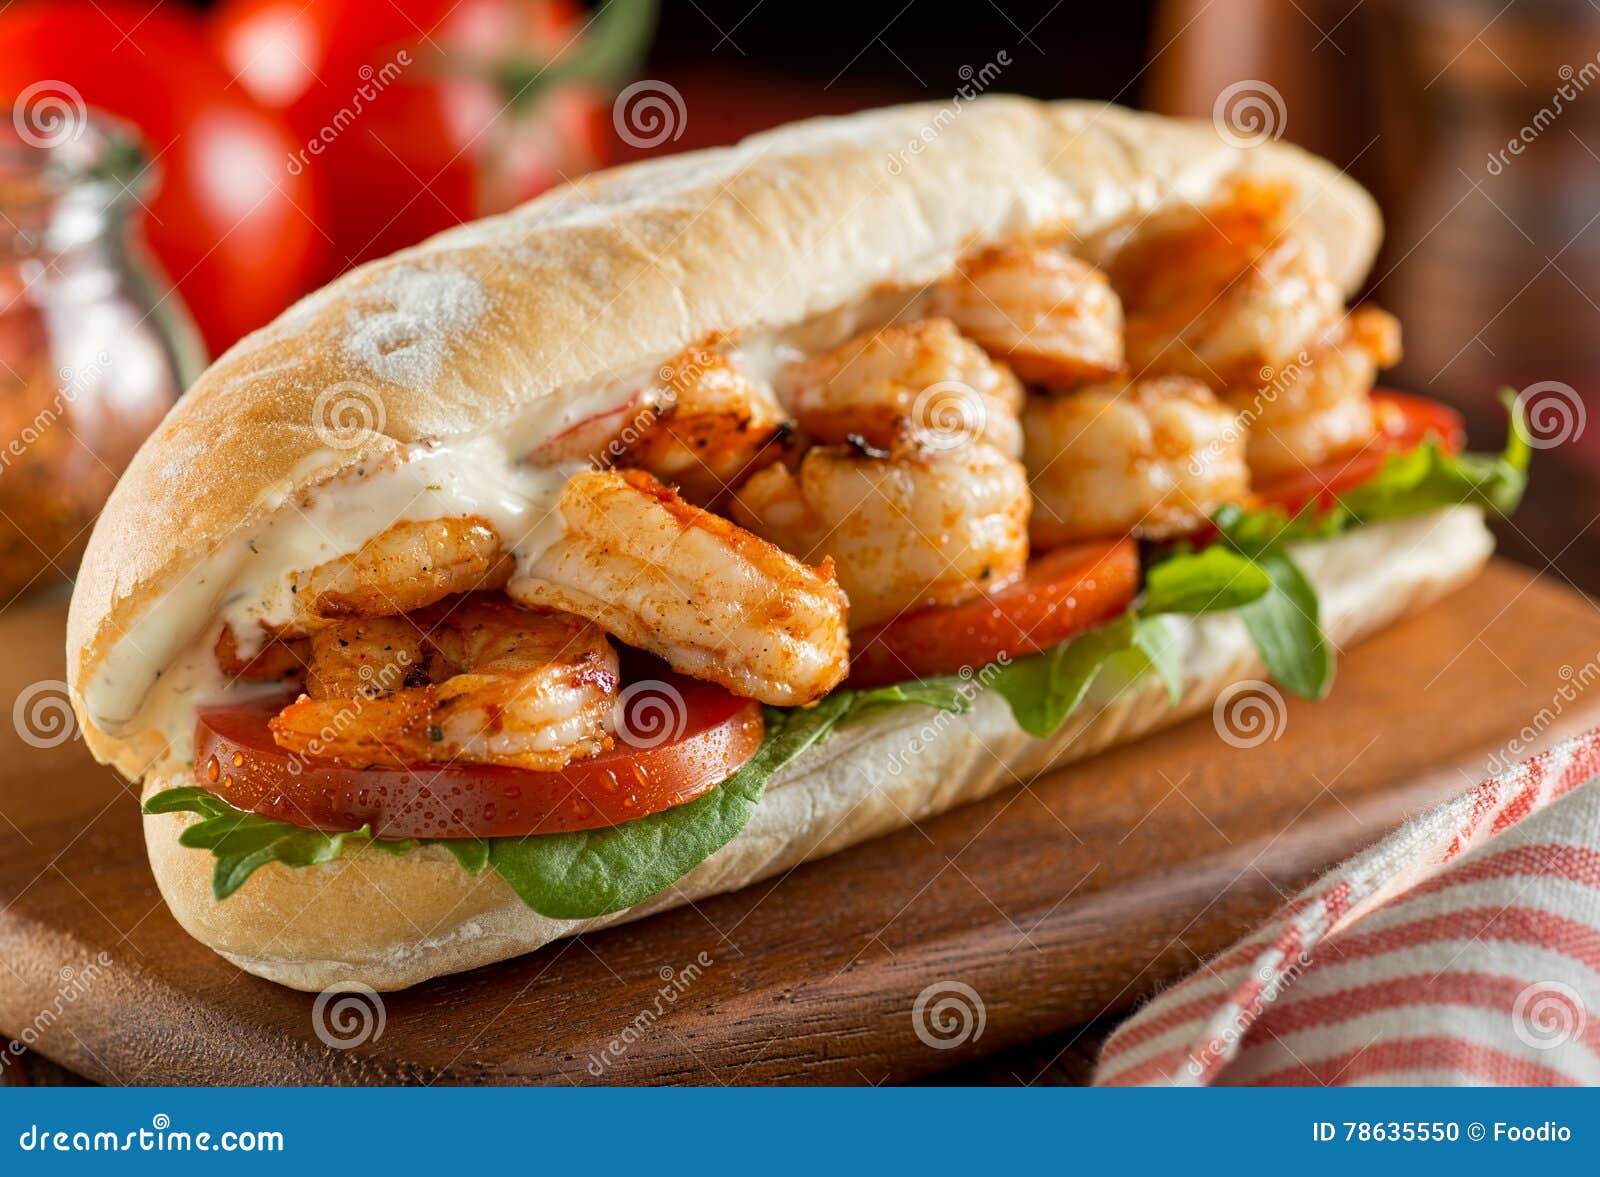 spicy shrimp sandwich